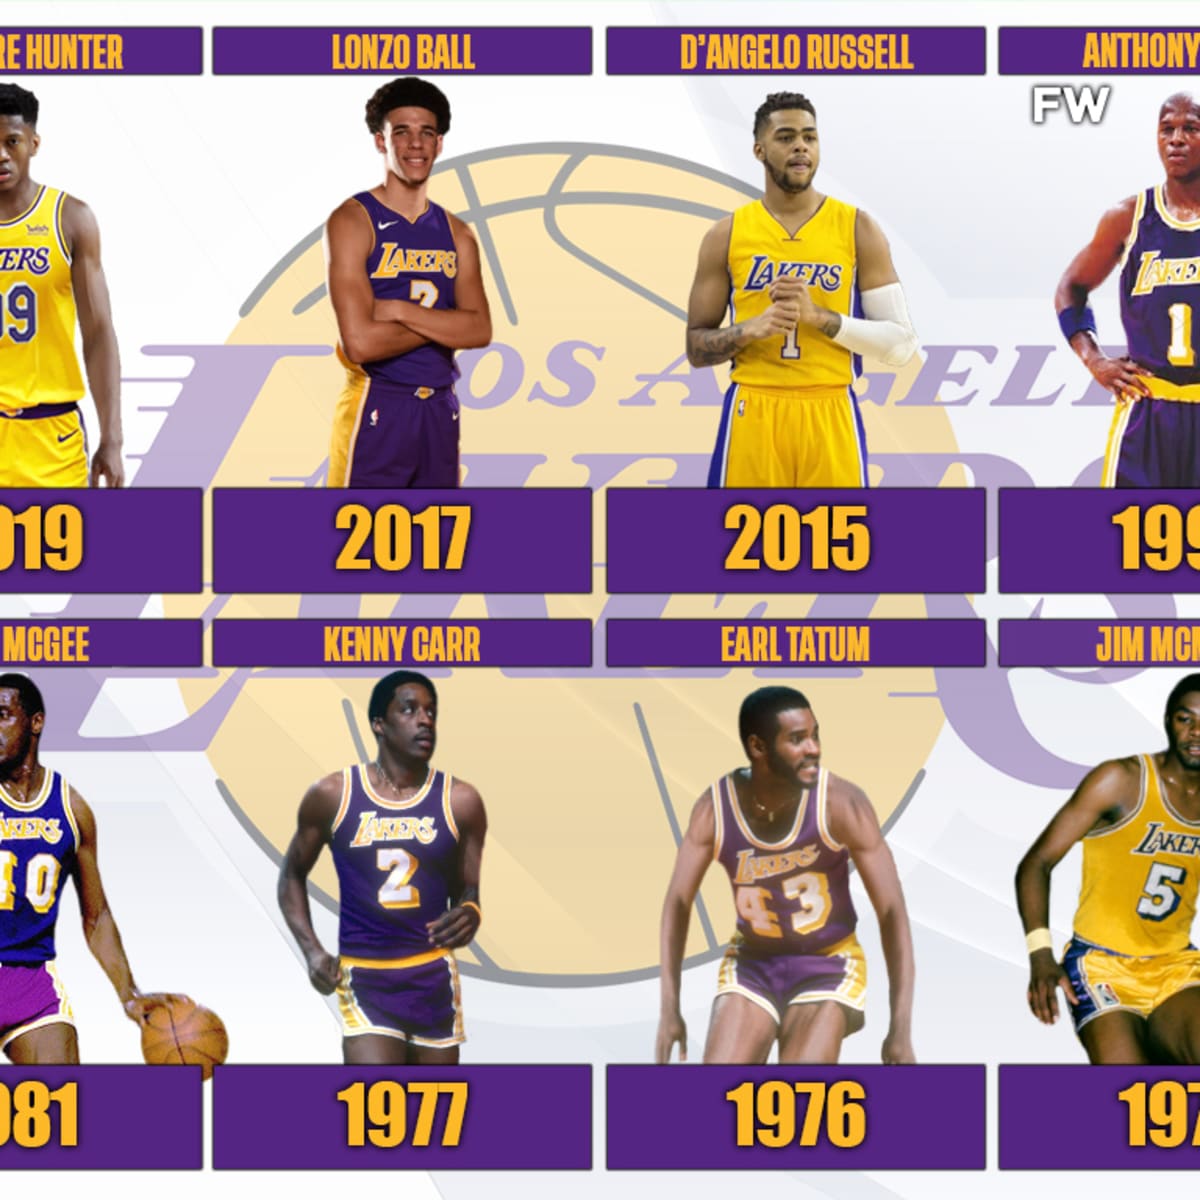 Kobe Bryant: Why didn't the Lakers draft Tatum? — drbelkin on Scorum